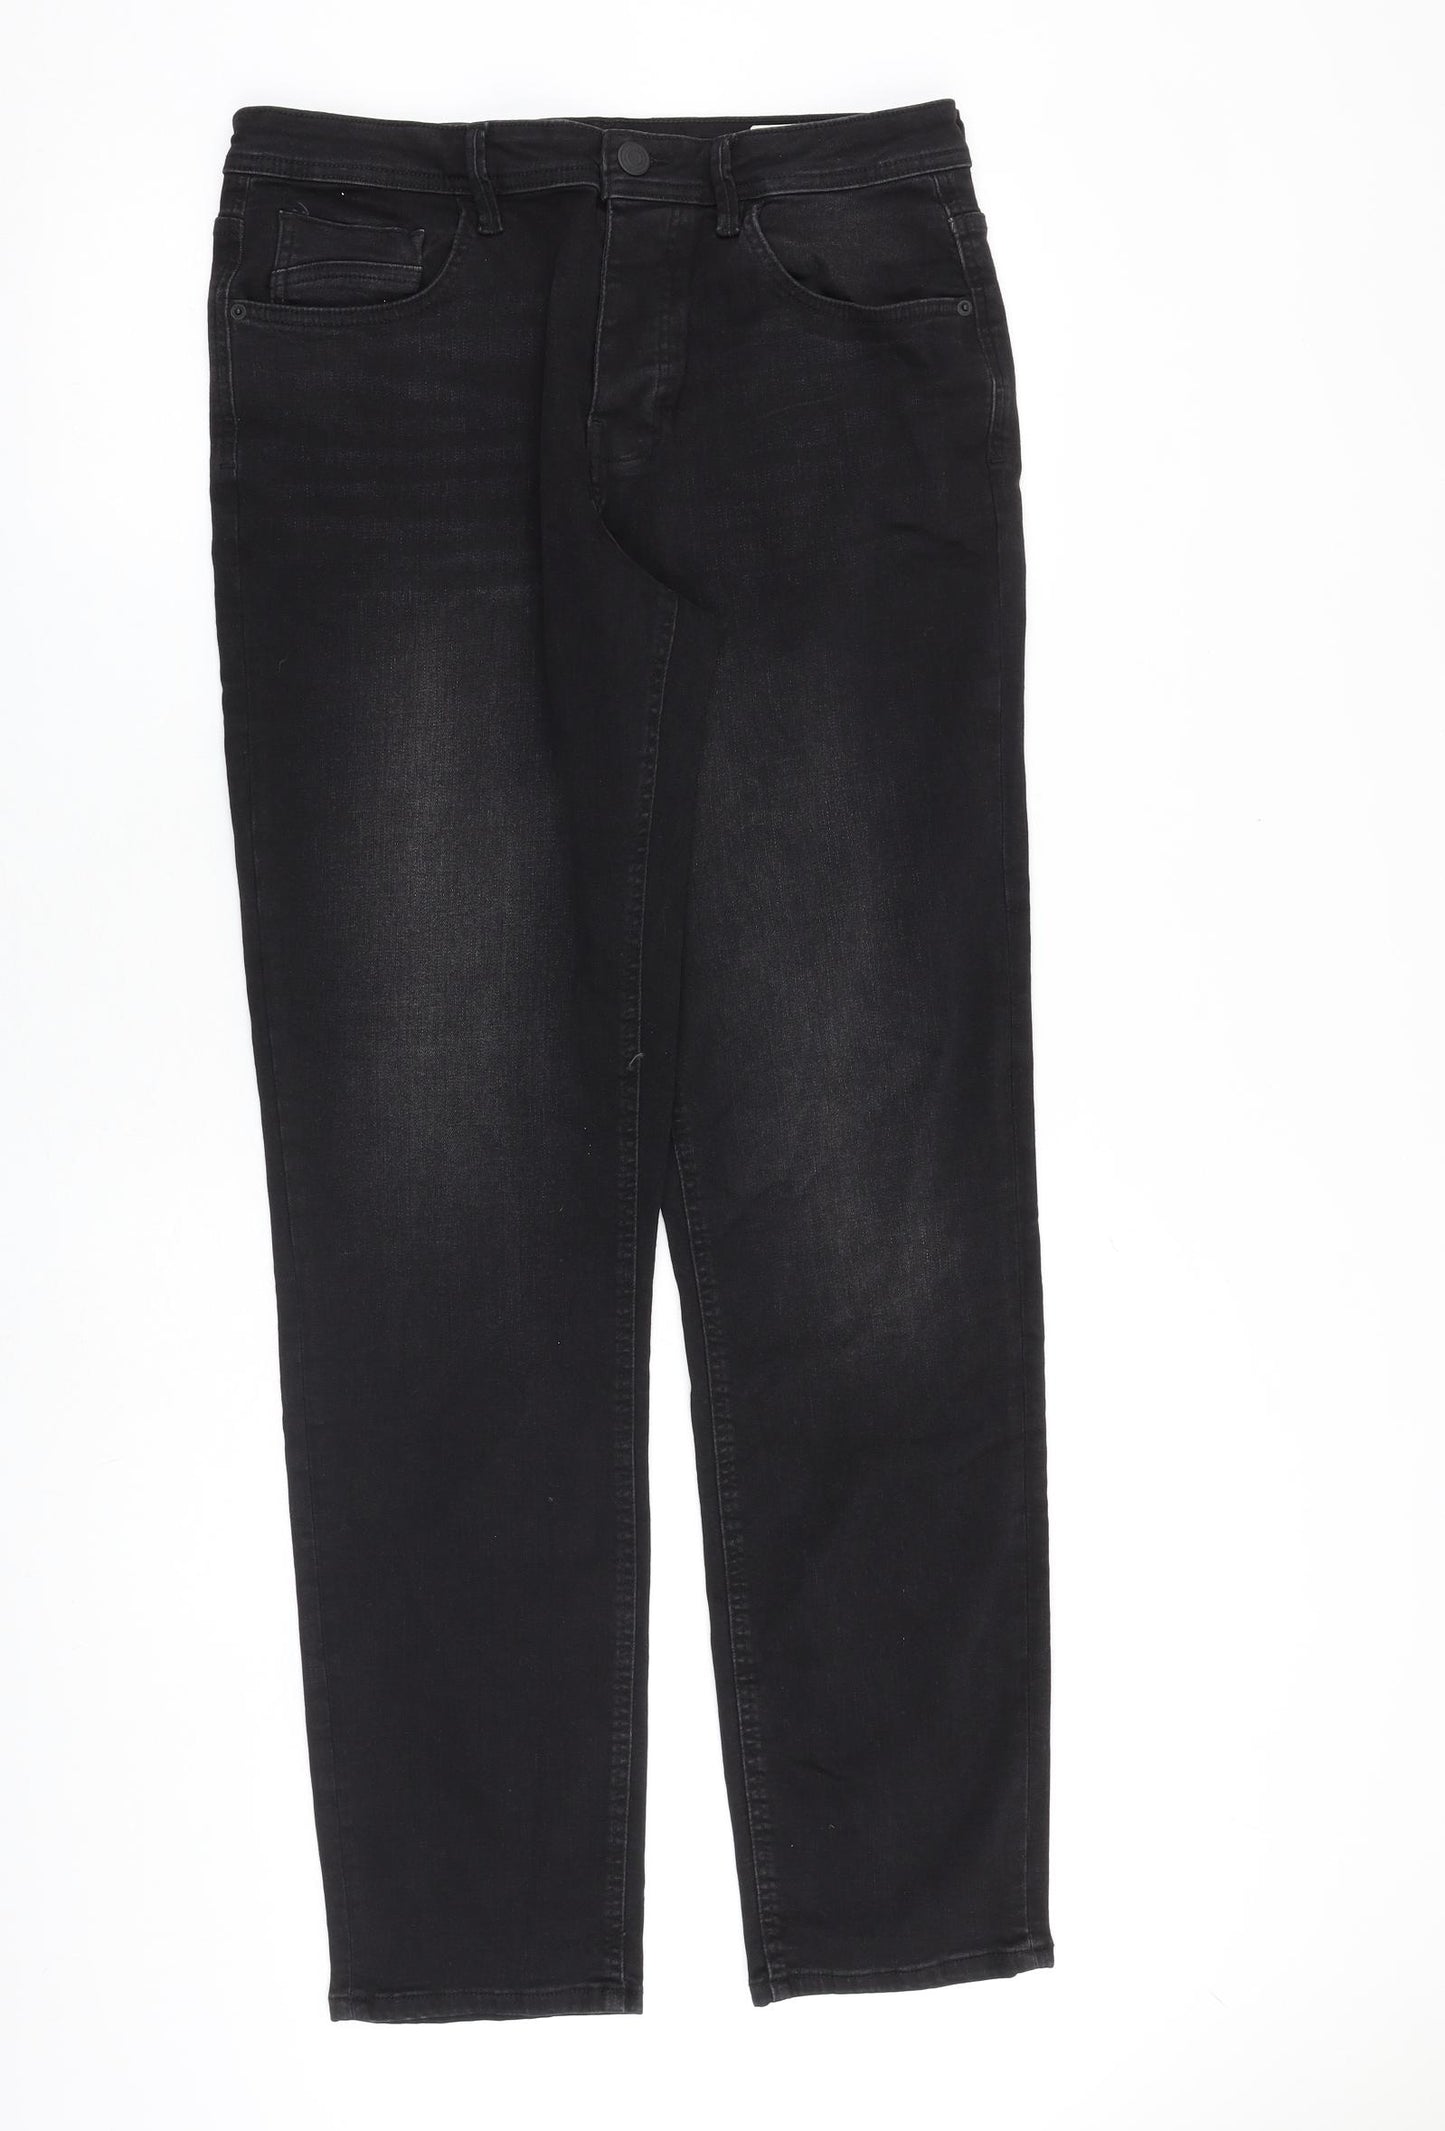 Denim & Co. Mens Black Cotton Straight Jeans Size 34 in L34 in Regular Button